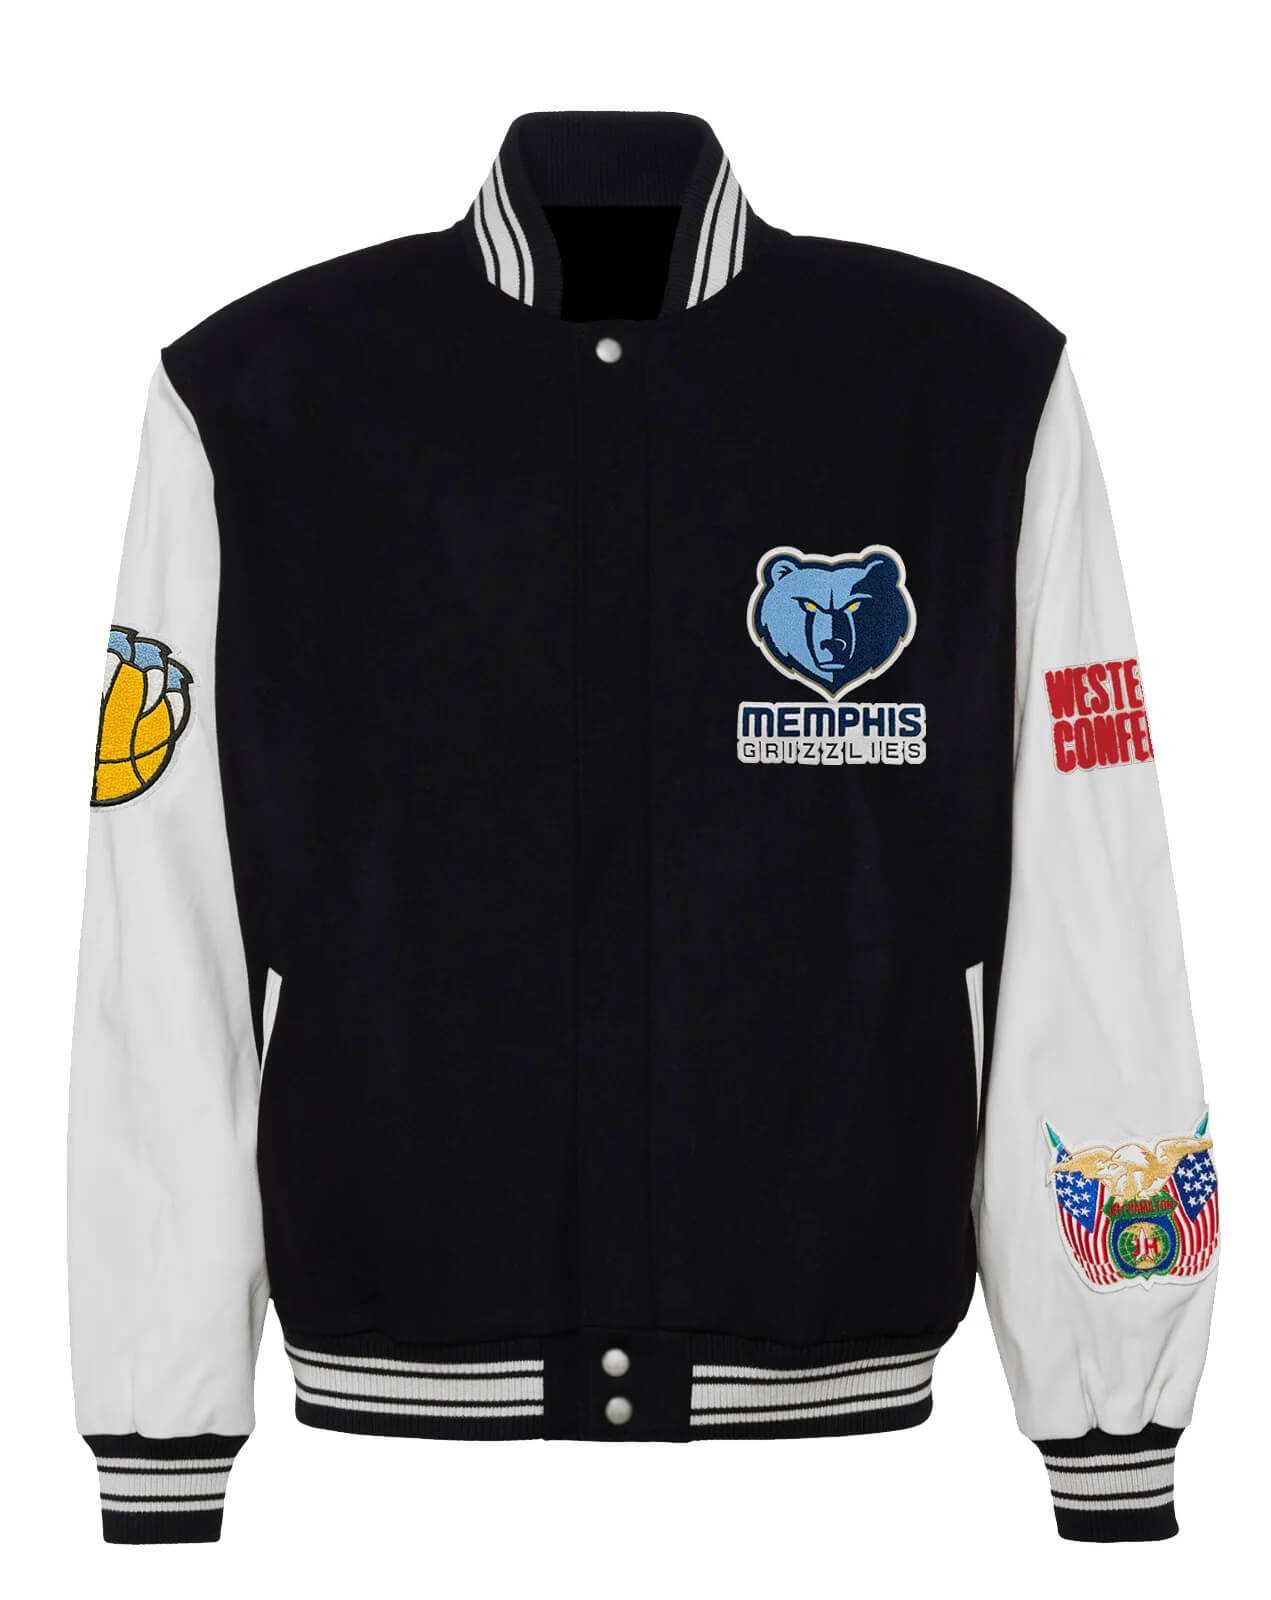 Memphis Grizzlies Archives - Maker of Jacket